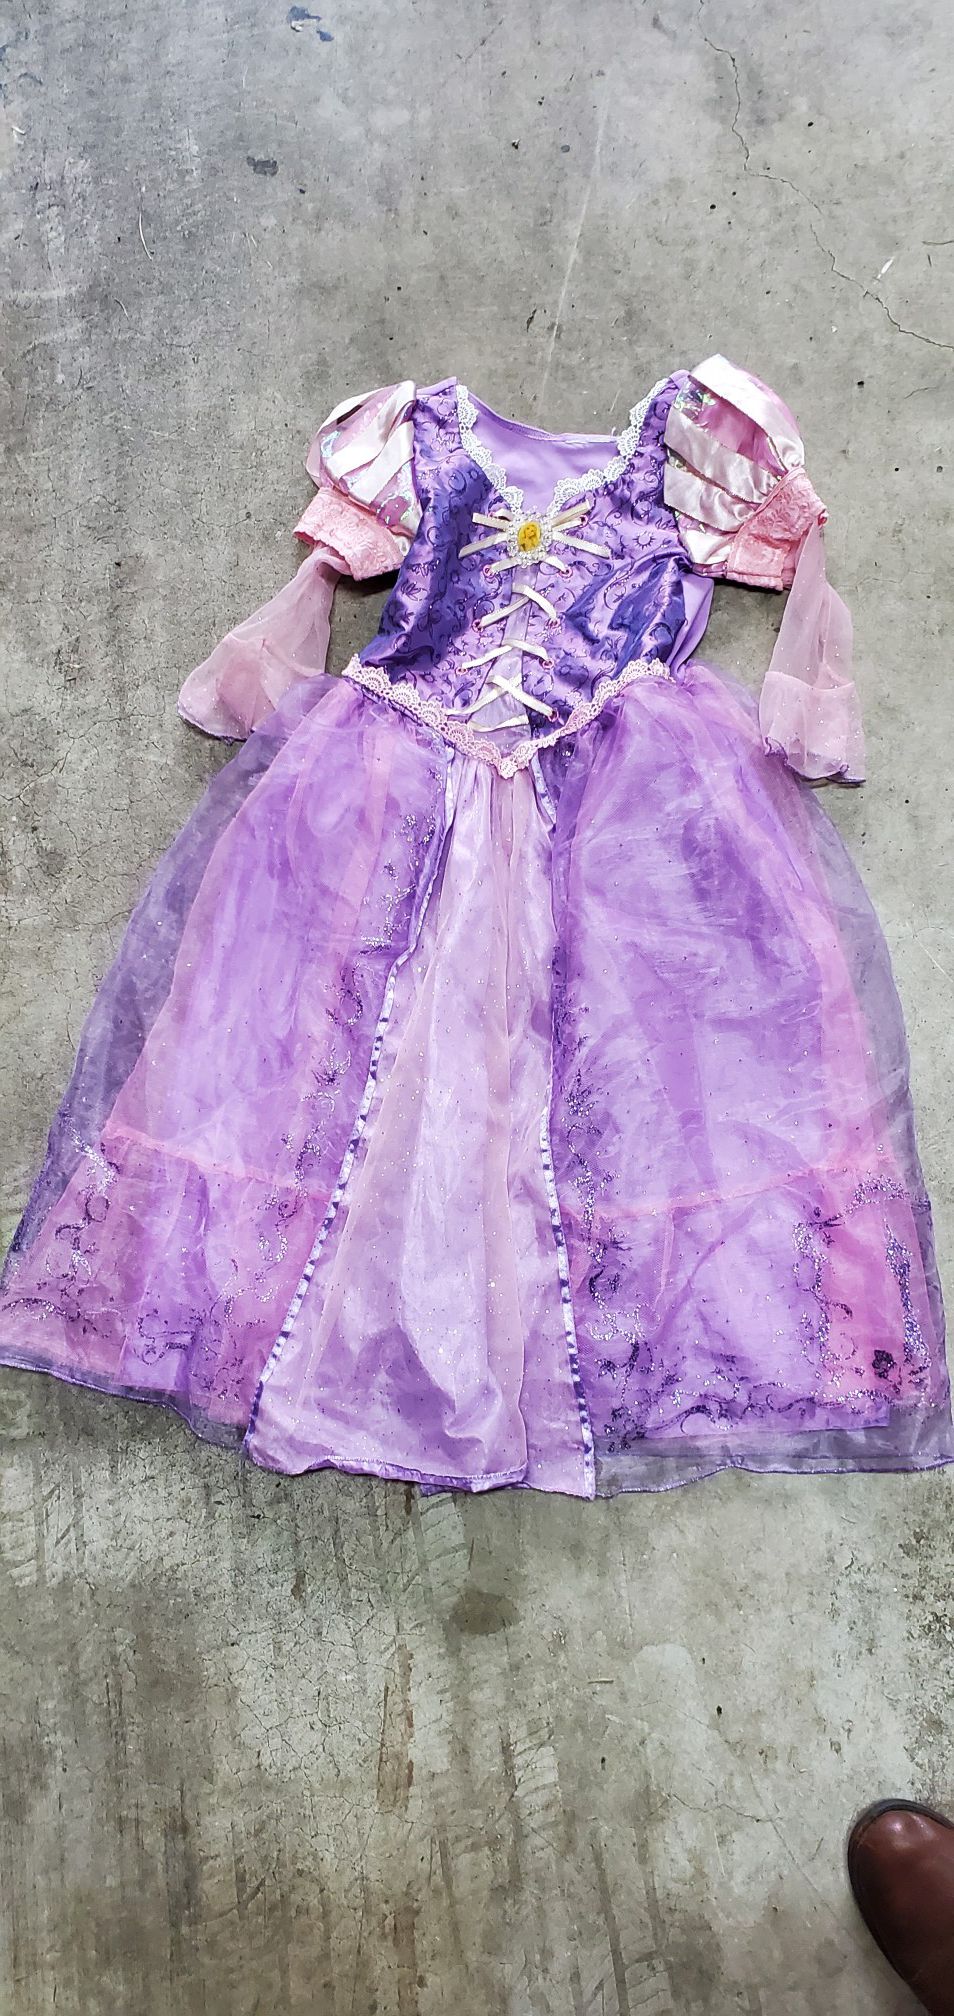 Rapunzel costume size 5